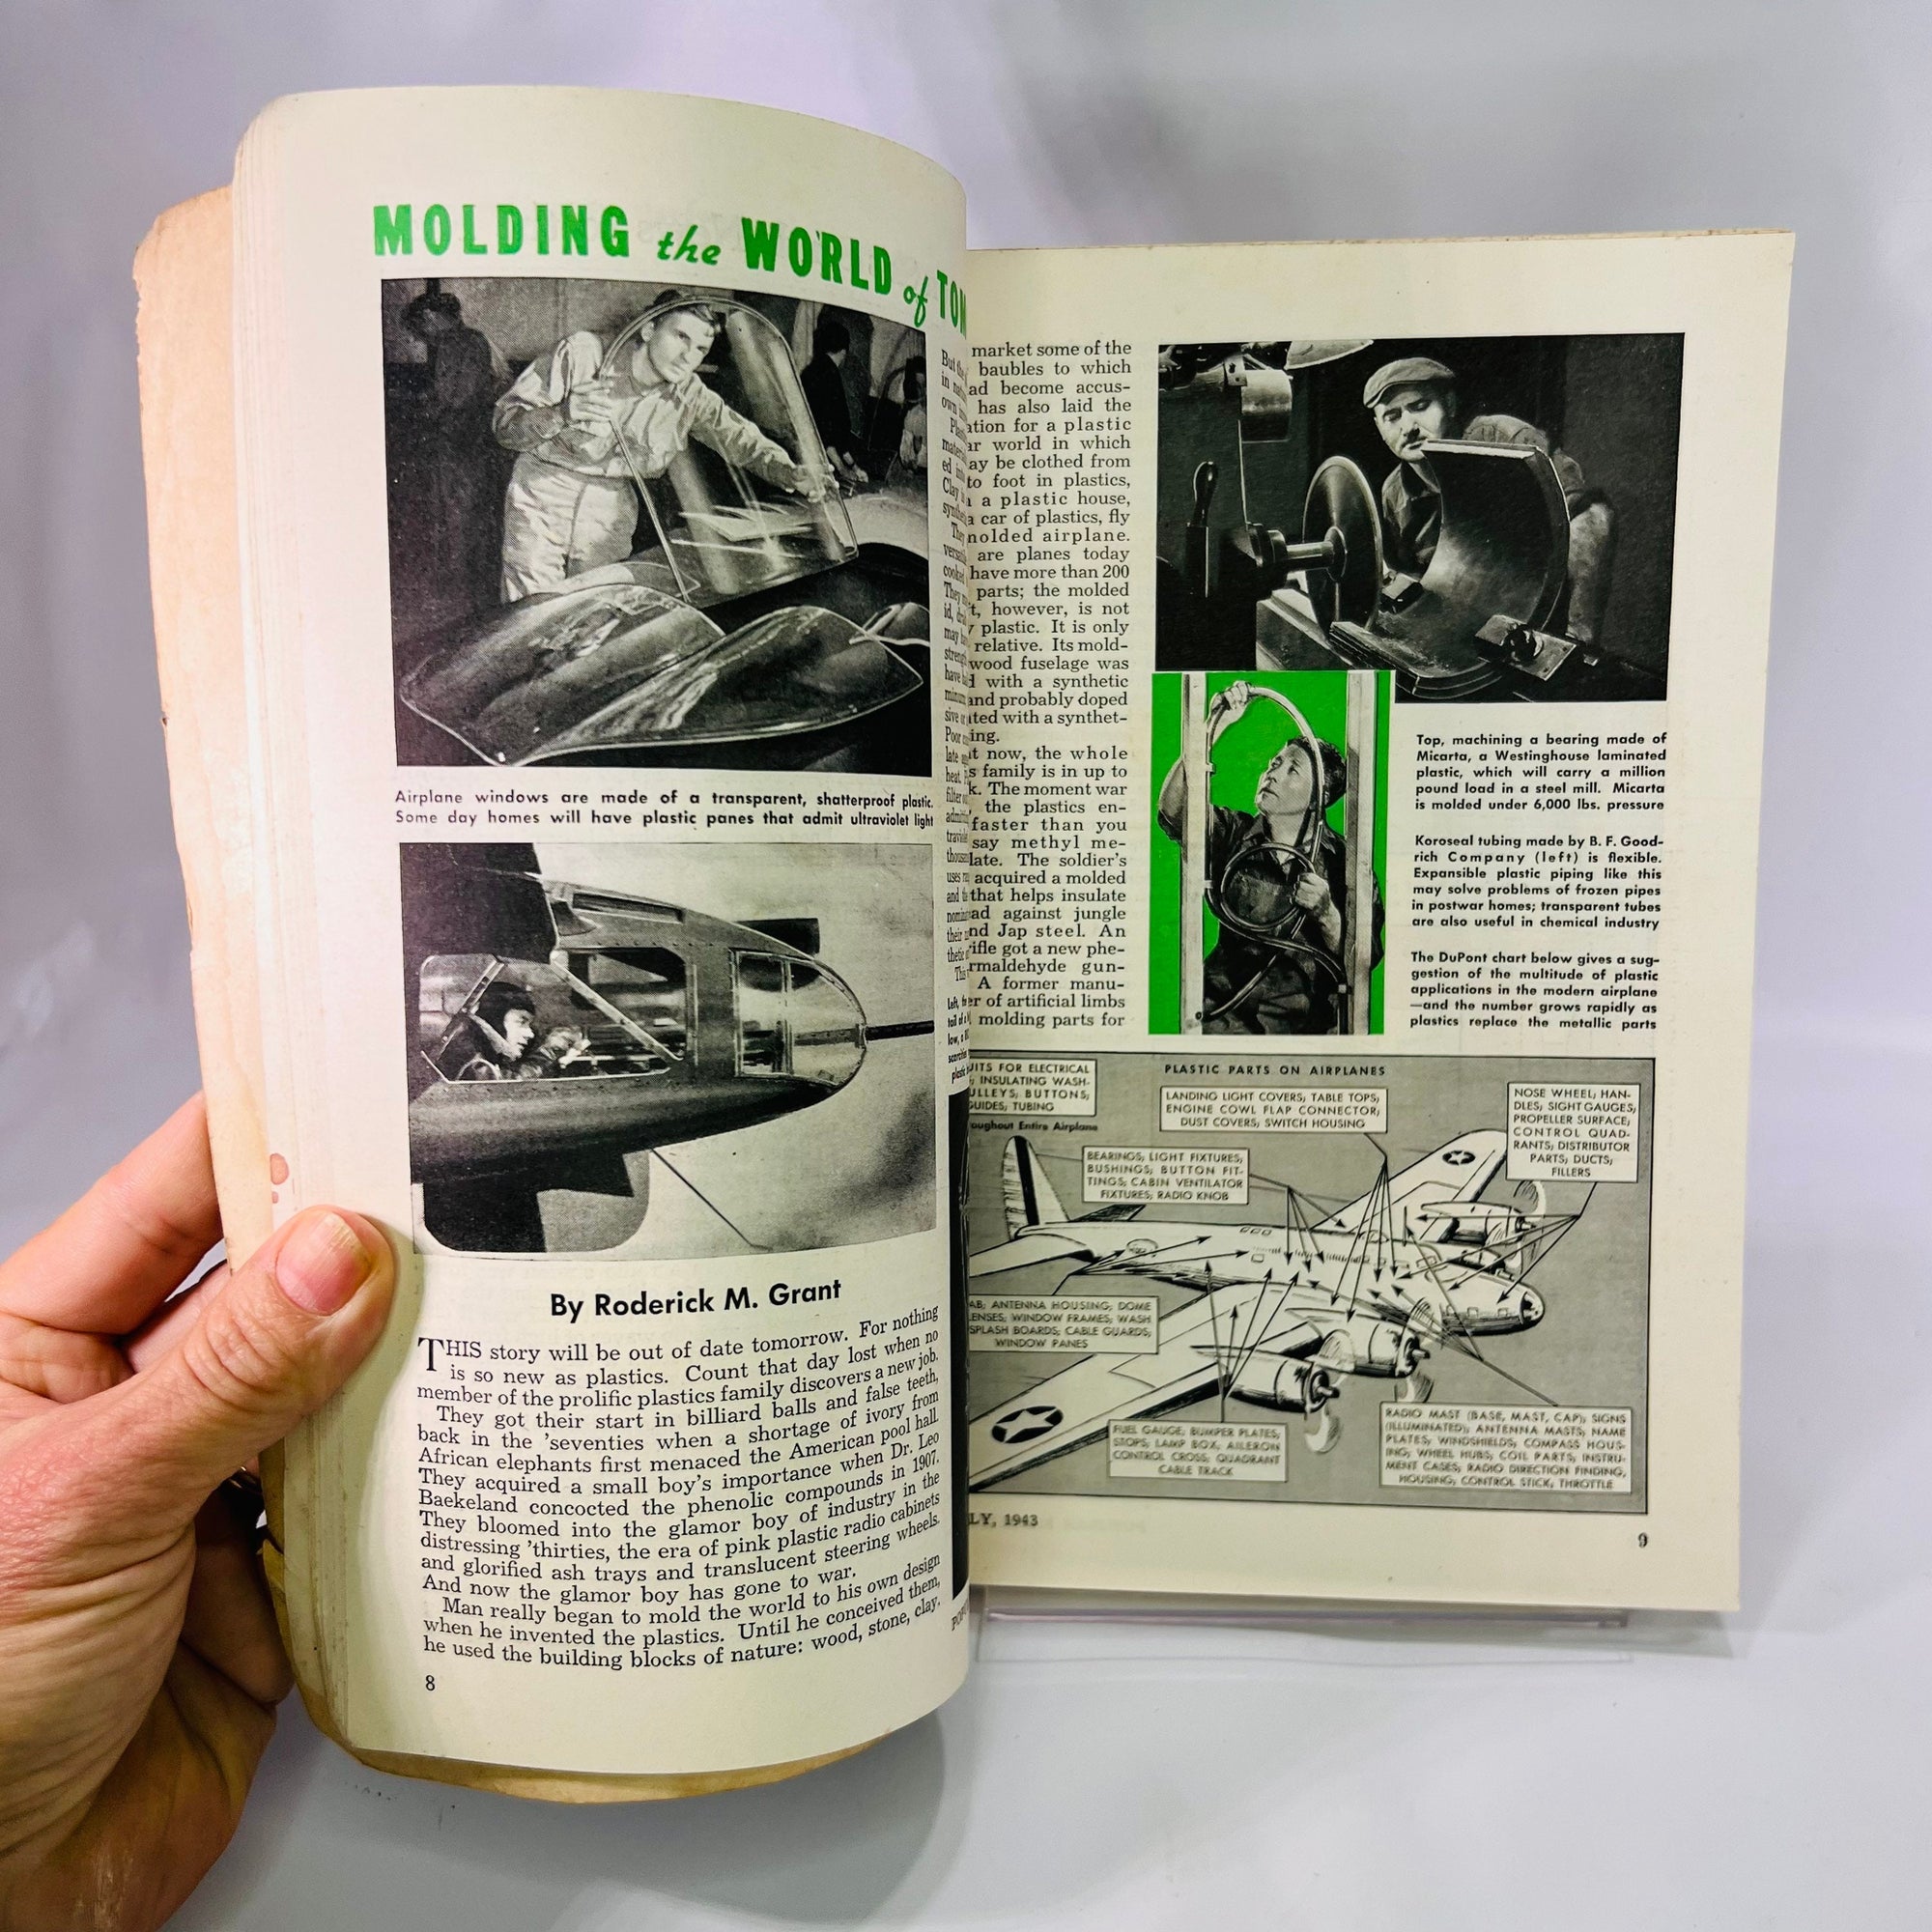 Popular Mechanics Magazine July Vol 80 Num 1 1943 Published by Henry H Windsor Cover: Sea Sickness Machine Vintage War Articles Advertising